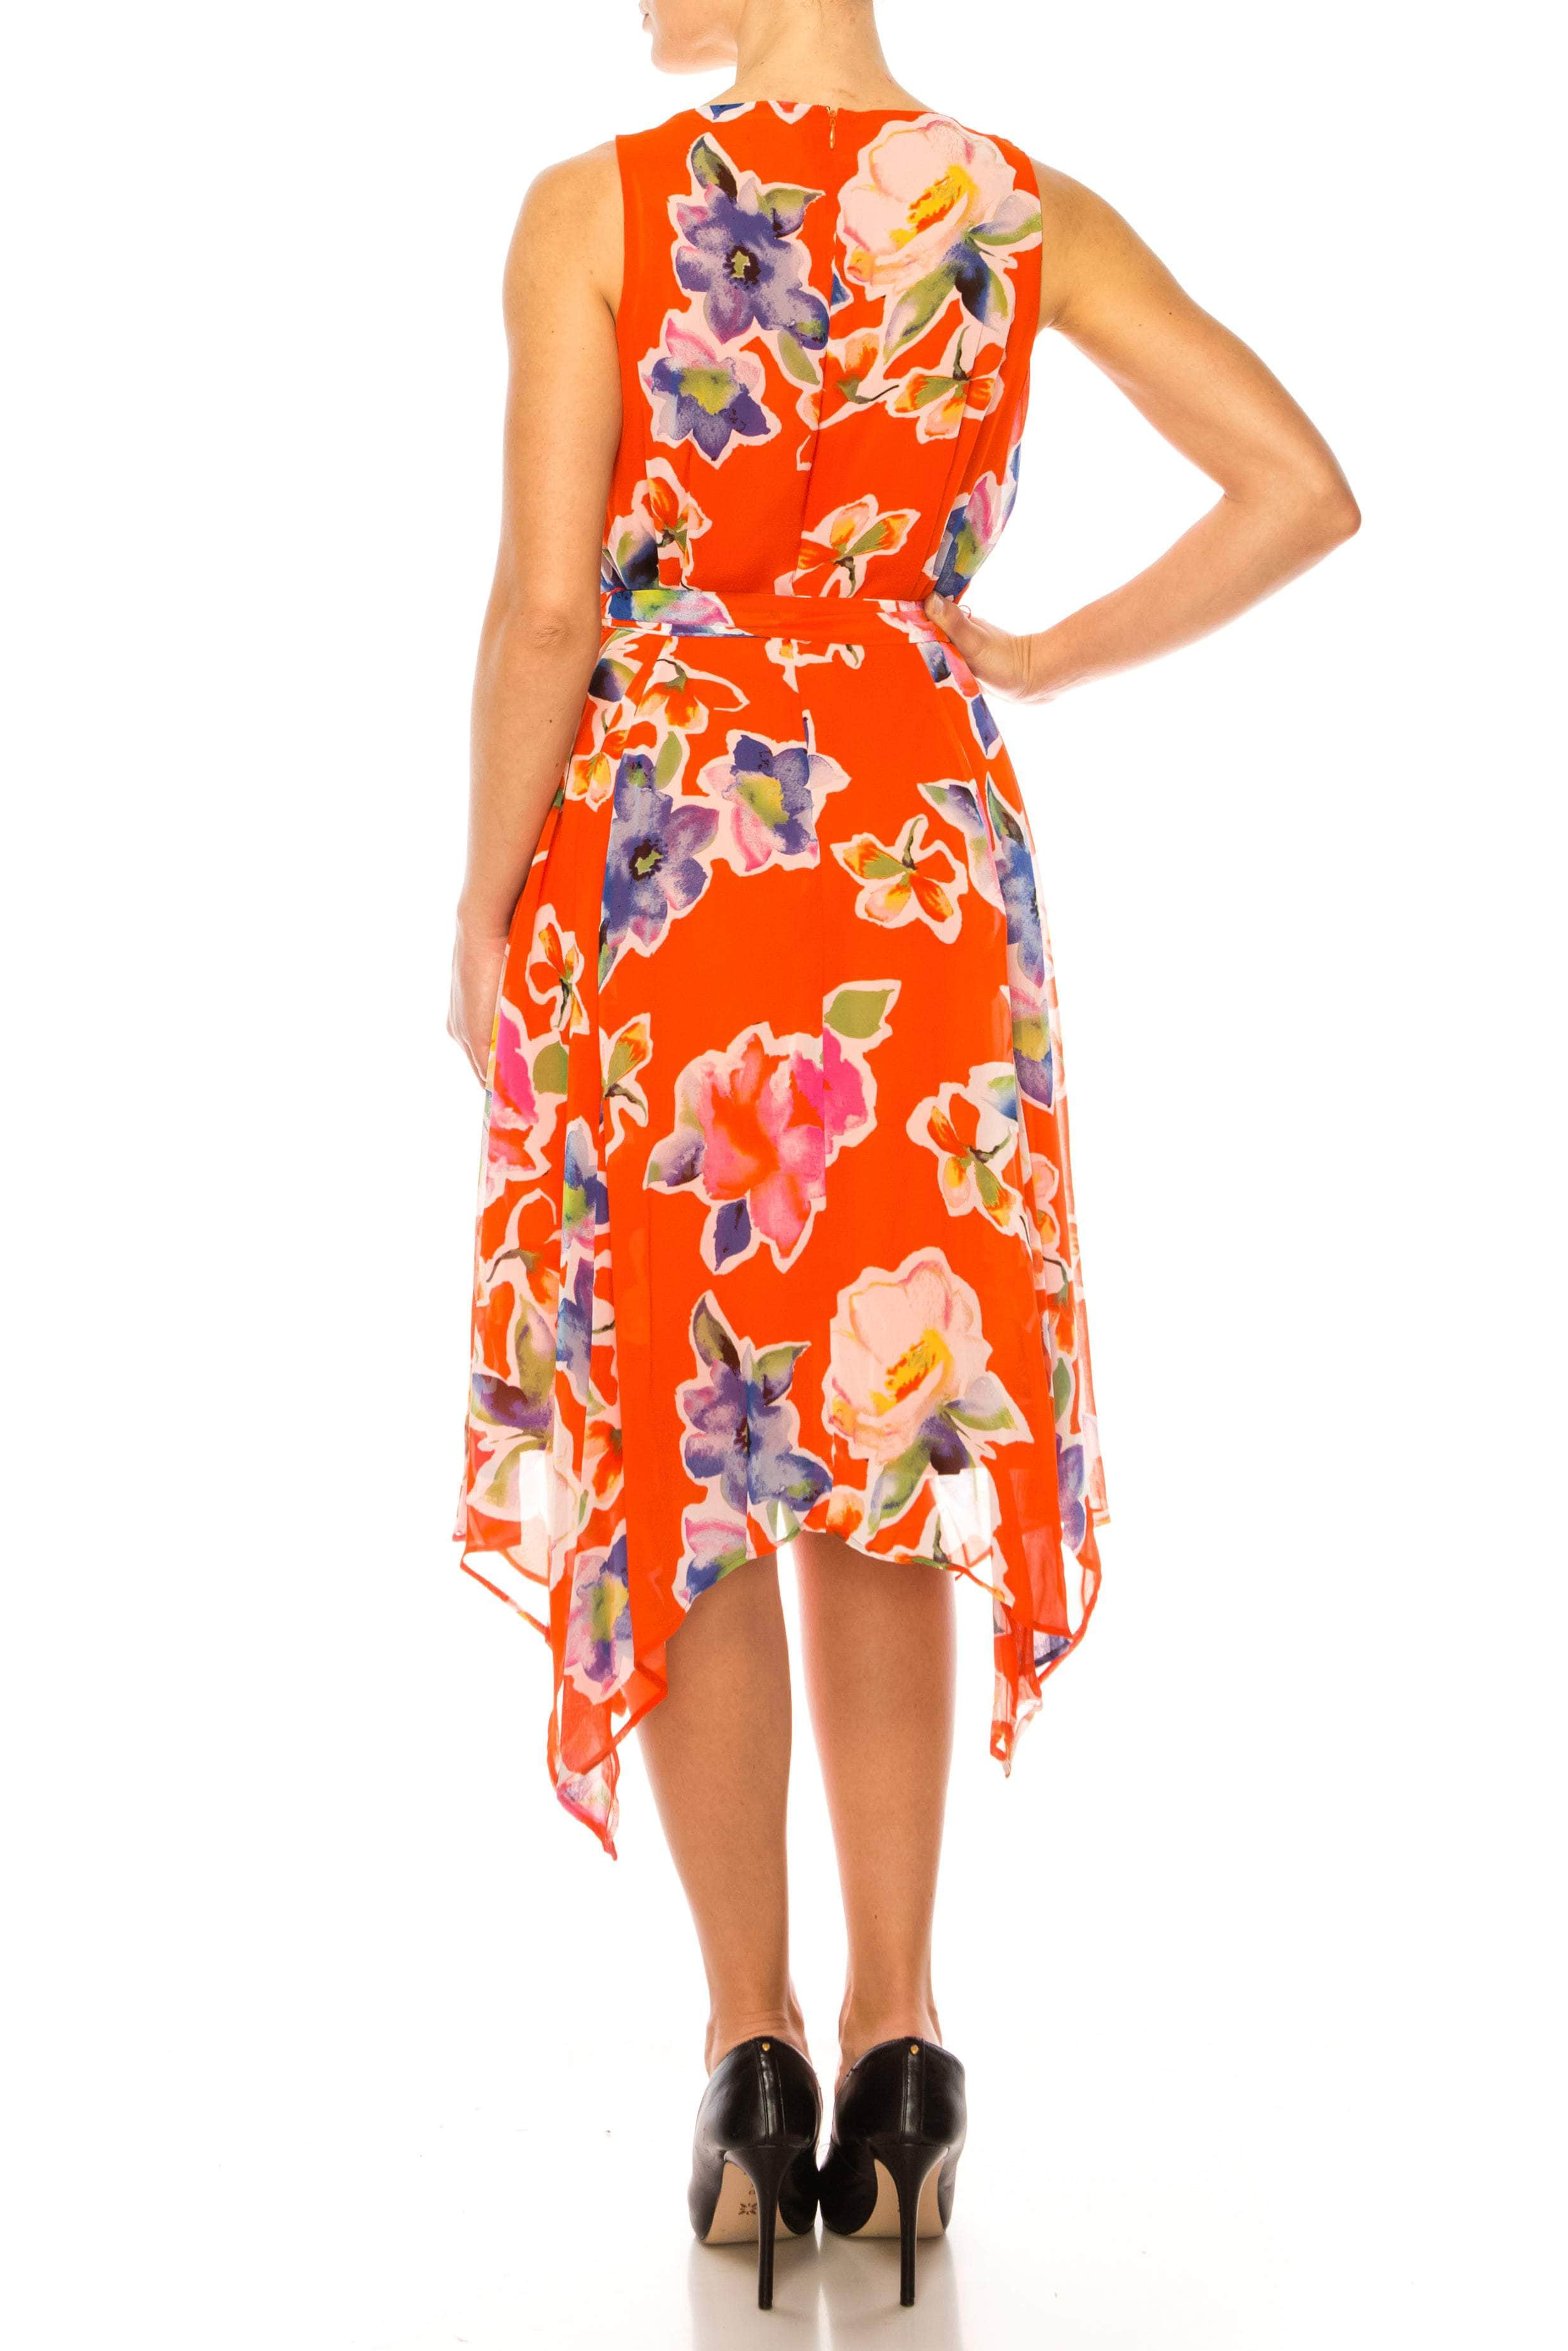 Image of ILE Clothing CHP350 - Jewel Neck Floral Dress